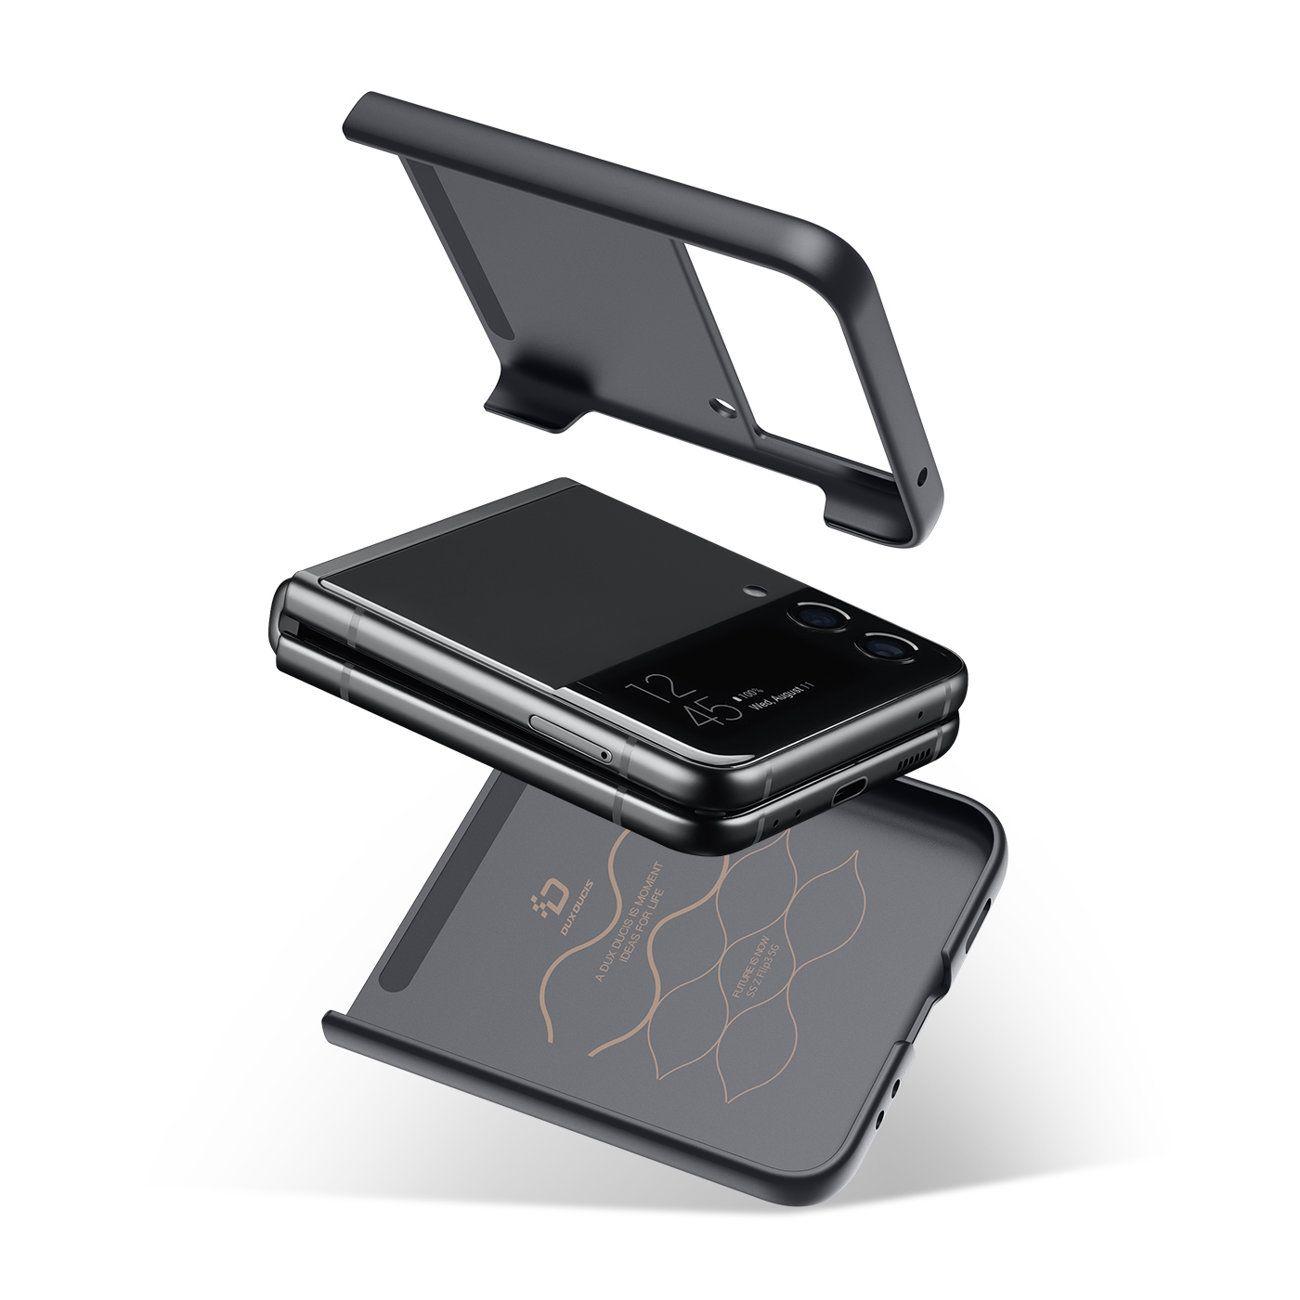 Dux Ducis Fino case is nylon covered Samsung Galaxy Z Flip 3 black